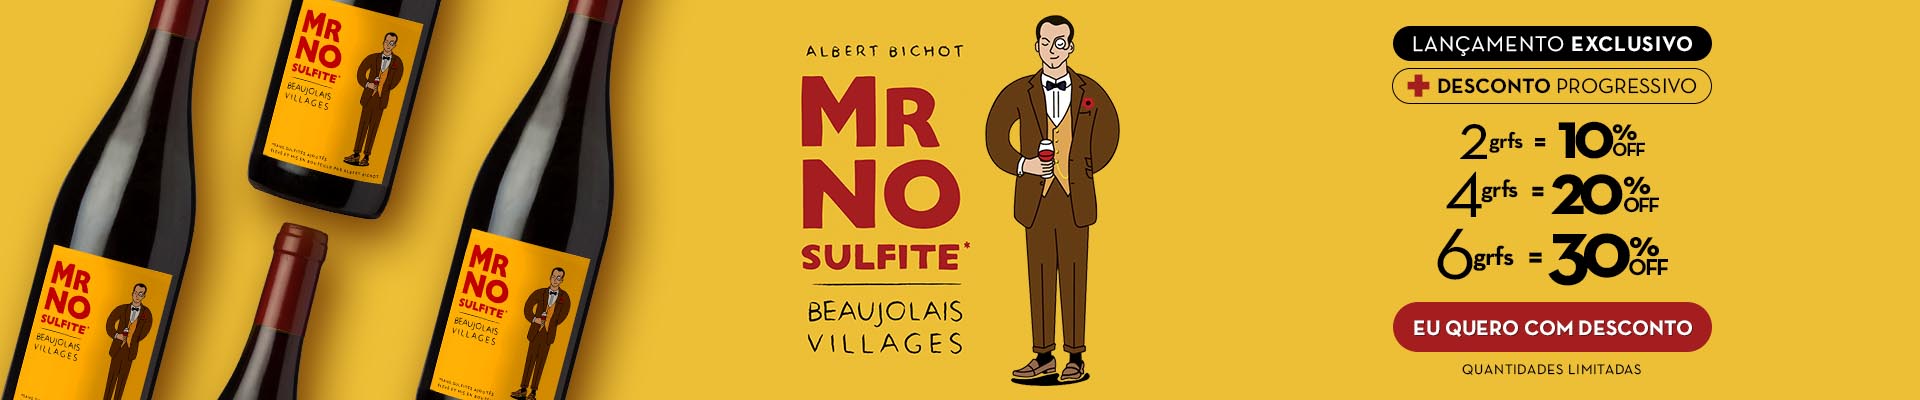 Albert Bichot Mr No Sulfite Beaujolais Villages 2019